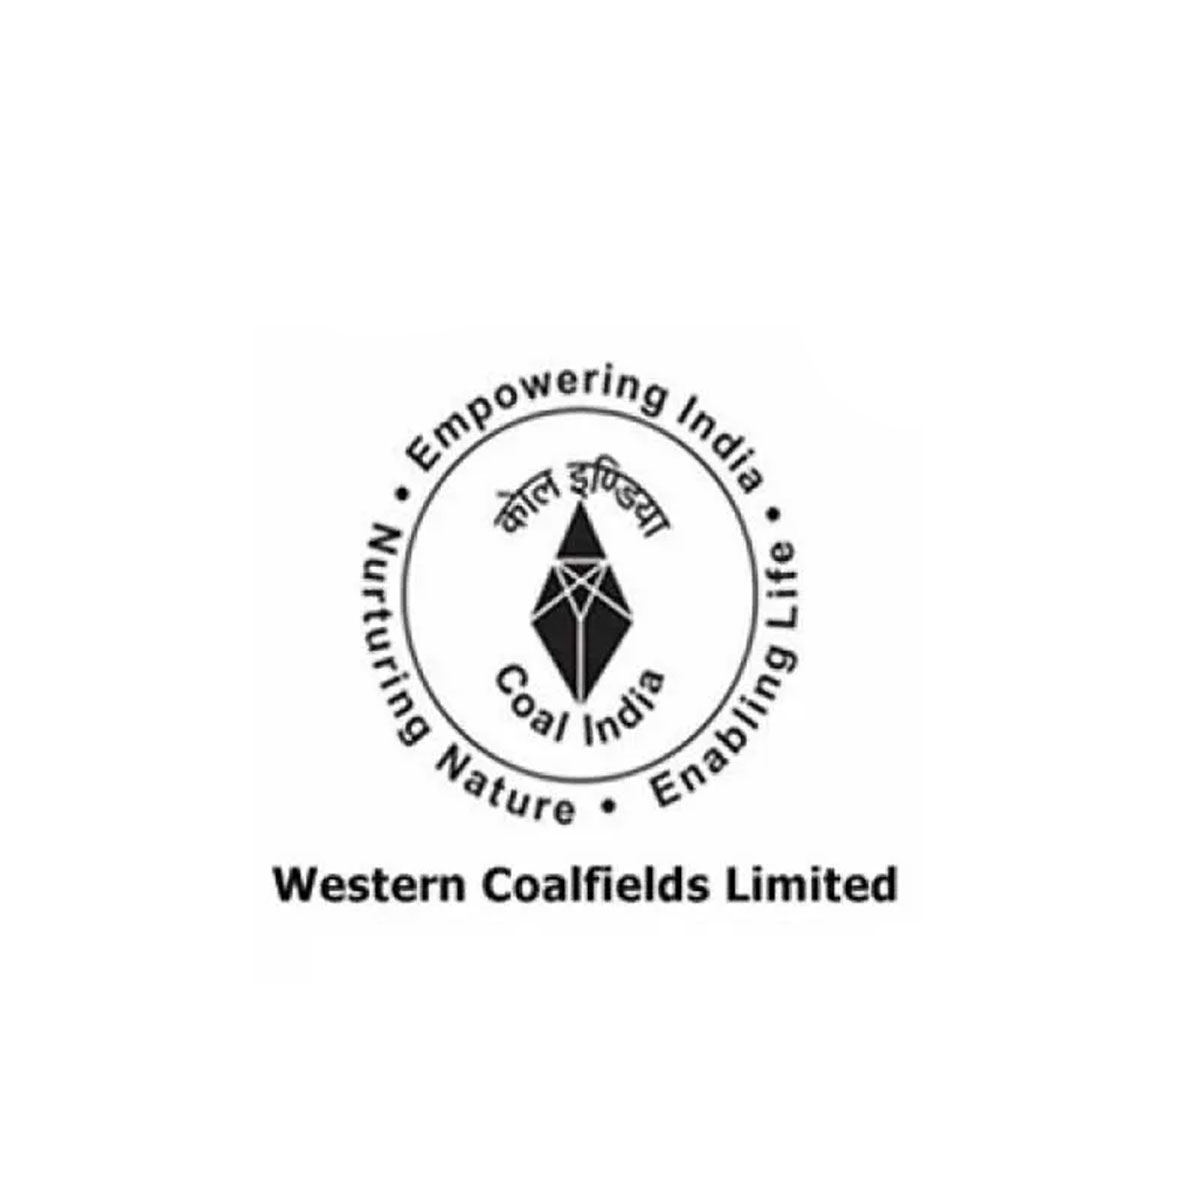 Wcl Graduate Apprentice Recruitment - Western Coalfields Limited Job Vacancies